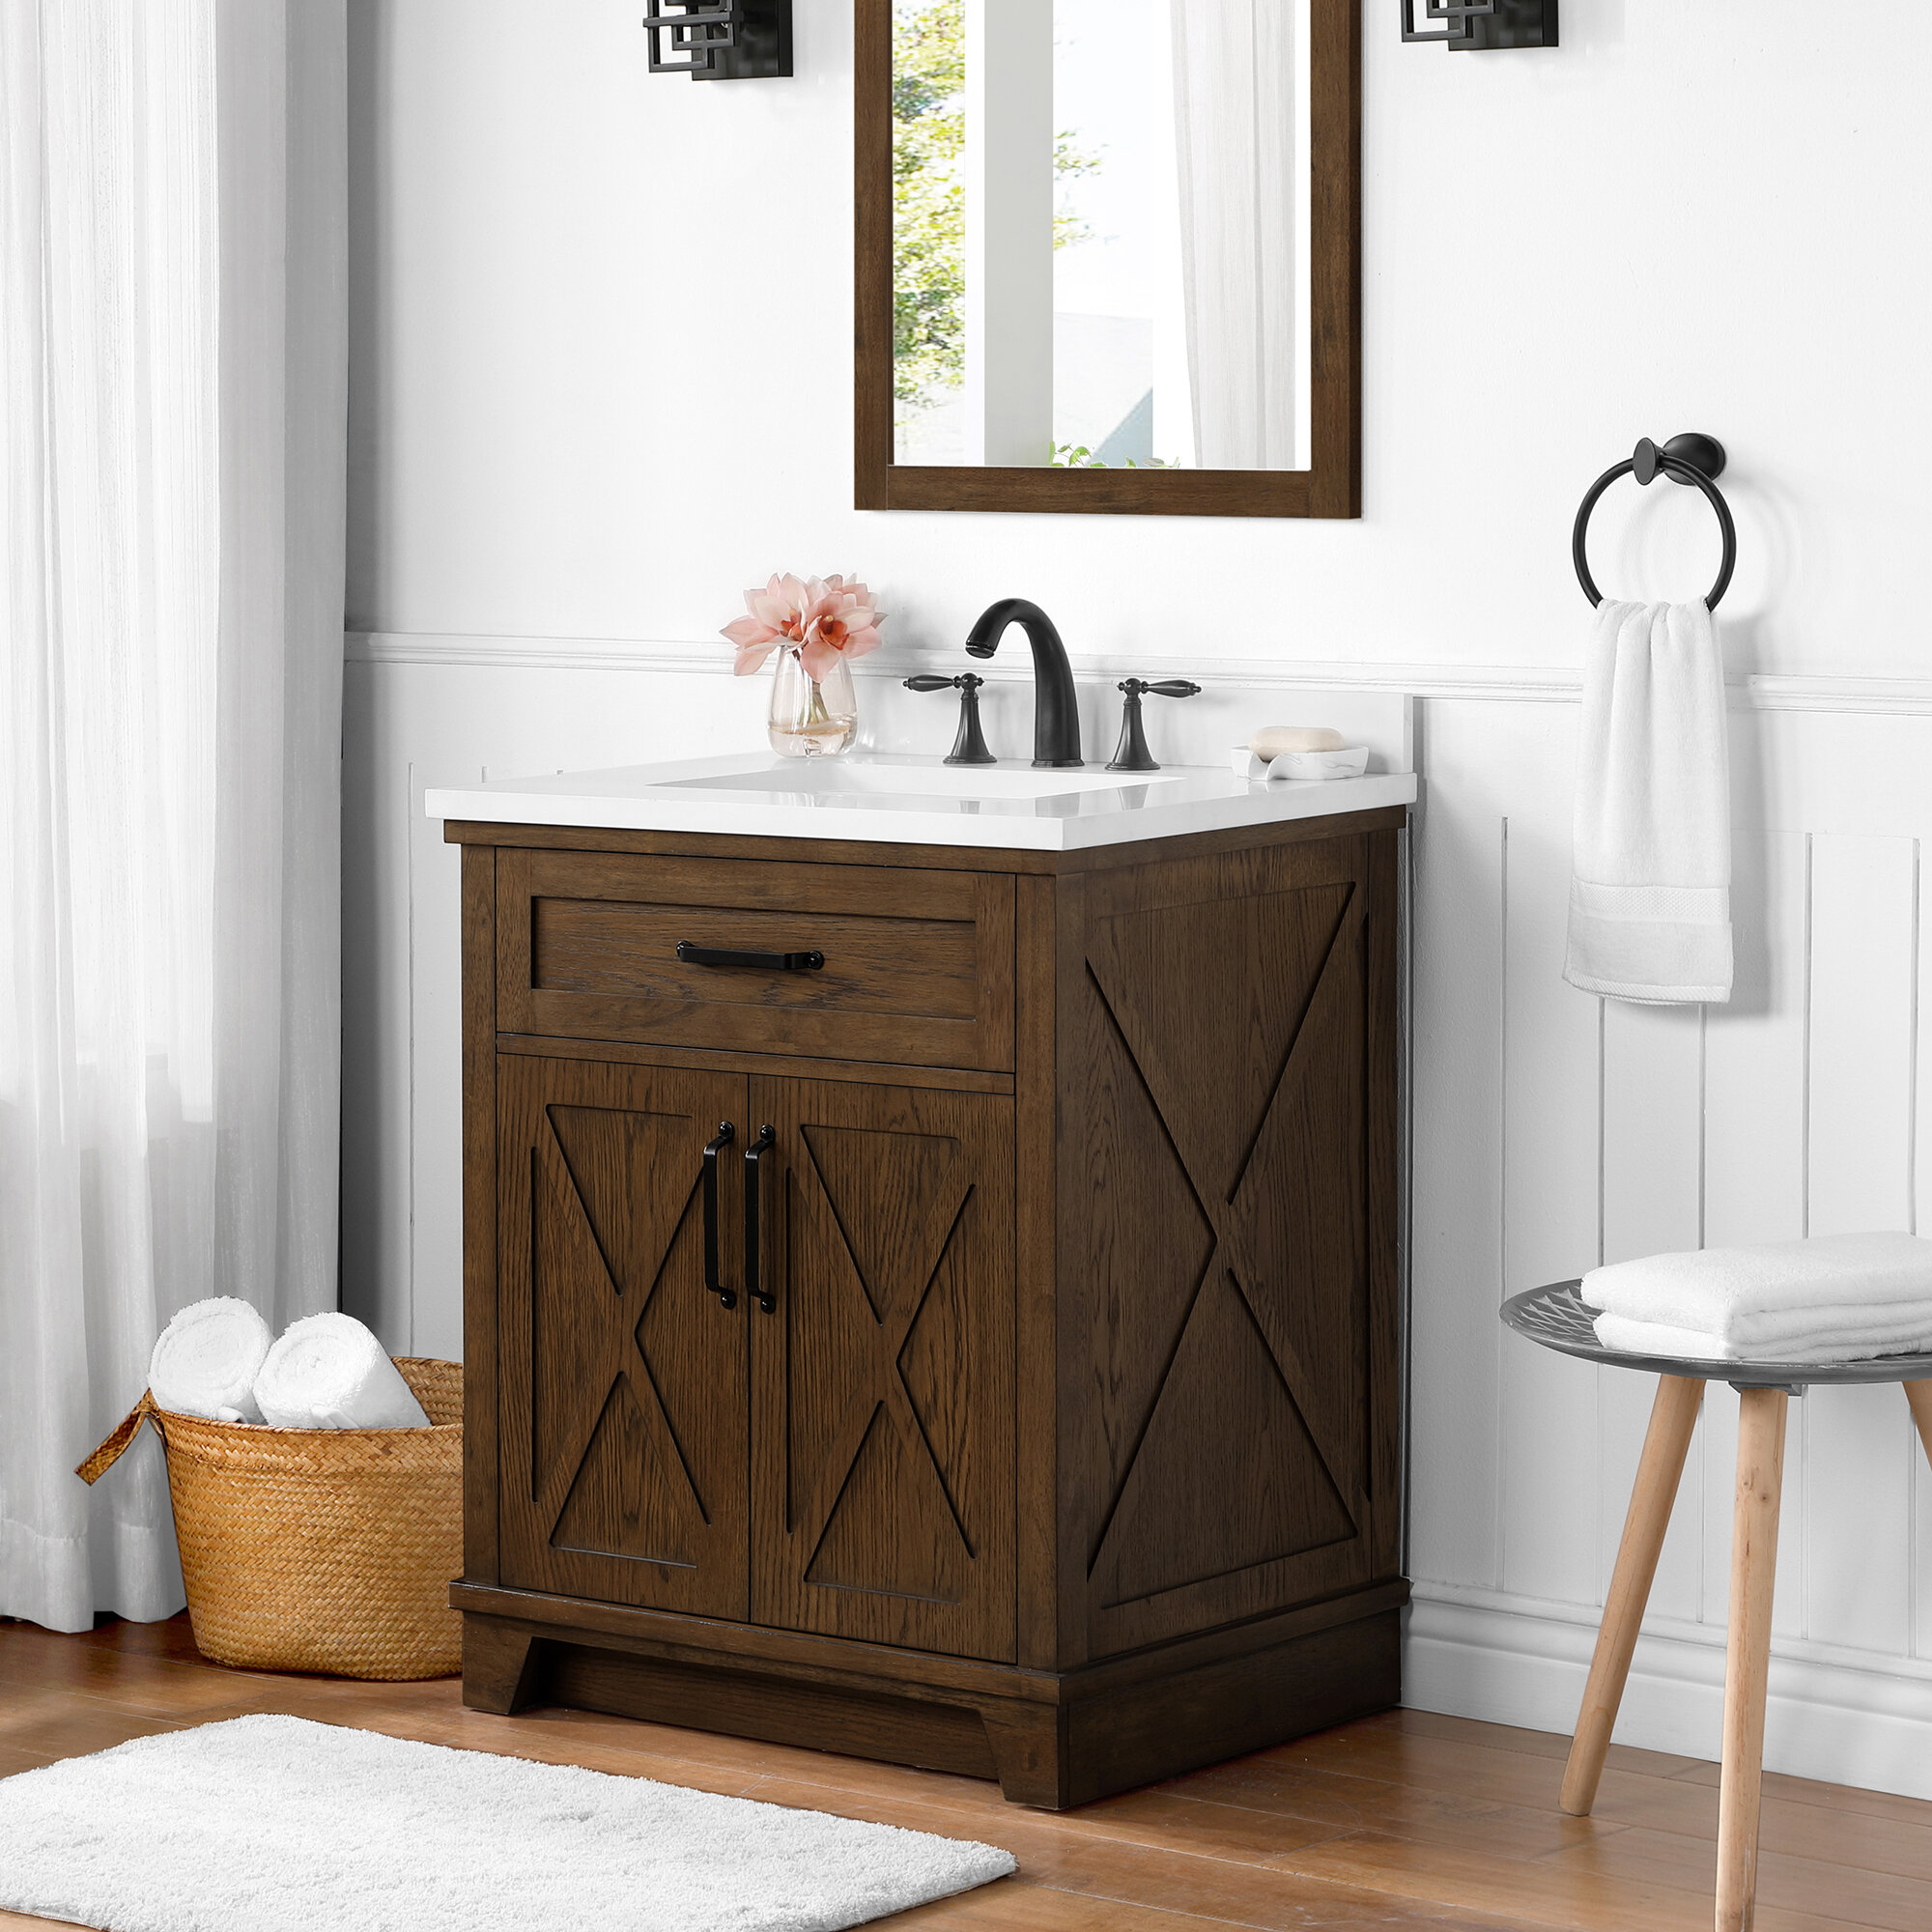 Ove Decors Ollie 30 In Single Sink Bathroom Vanity In Antique Coffee Finish Wayfair